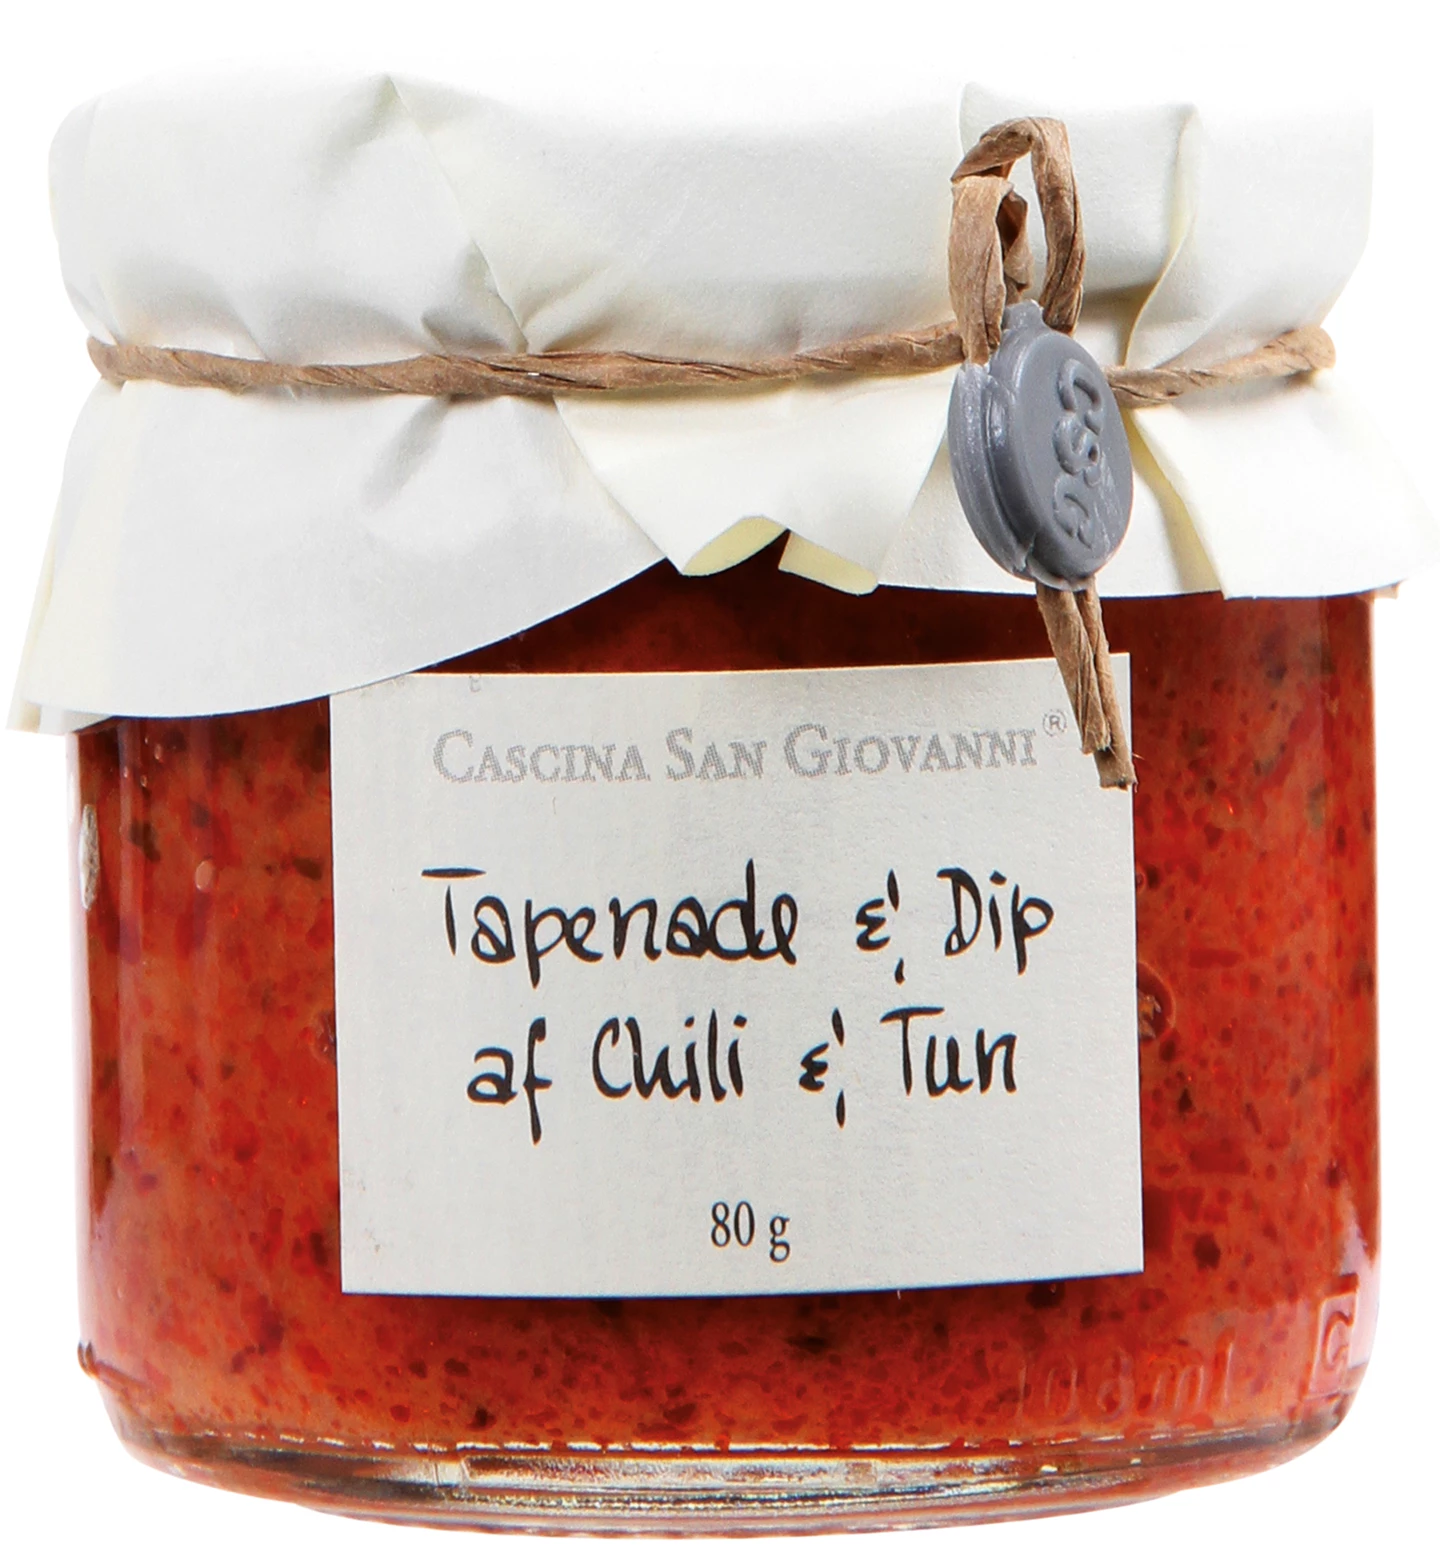 Løgismose Delikatesser Cascina San Giovanni Tapenade & Dip af chili & tun 80g - 128014